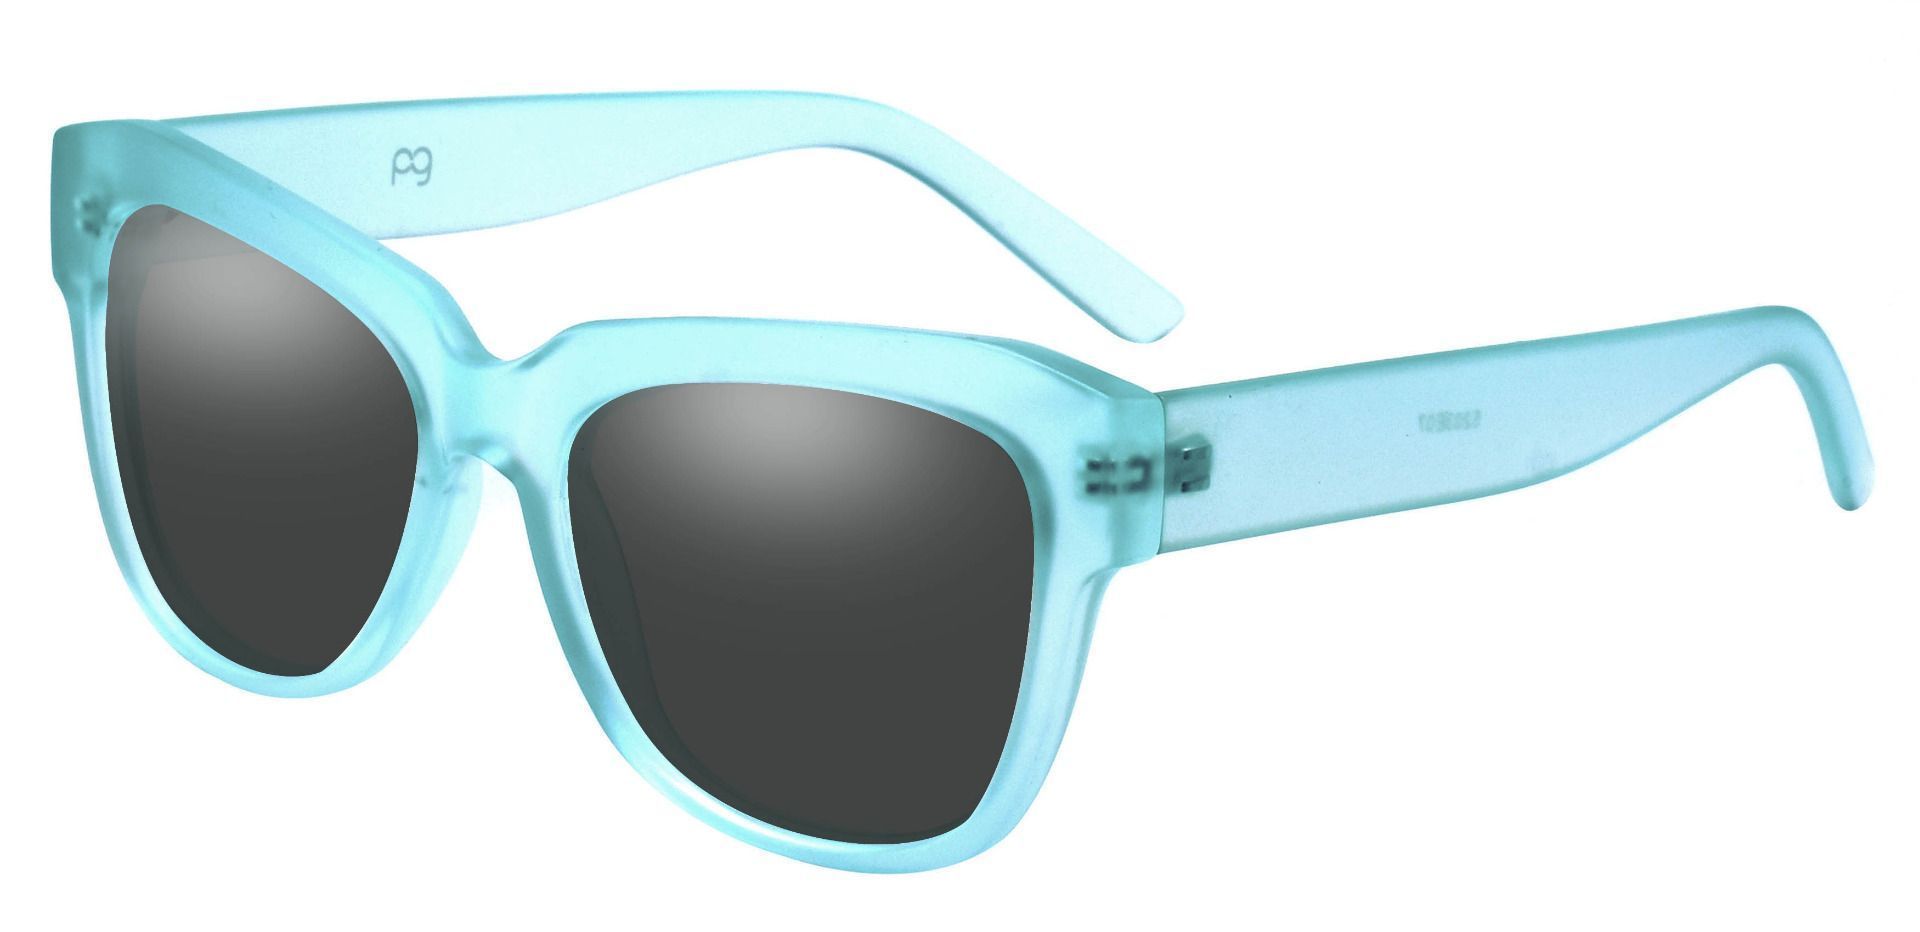 Gina Cat-Eye Reading Sunglasses - Blue Frame With Gray Lenses